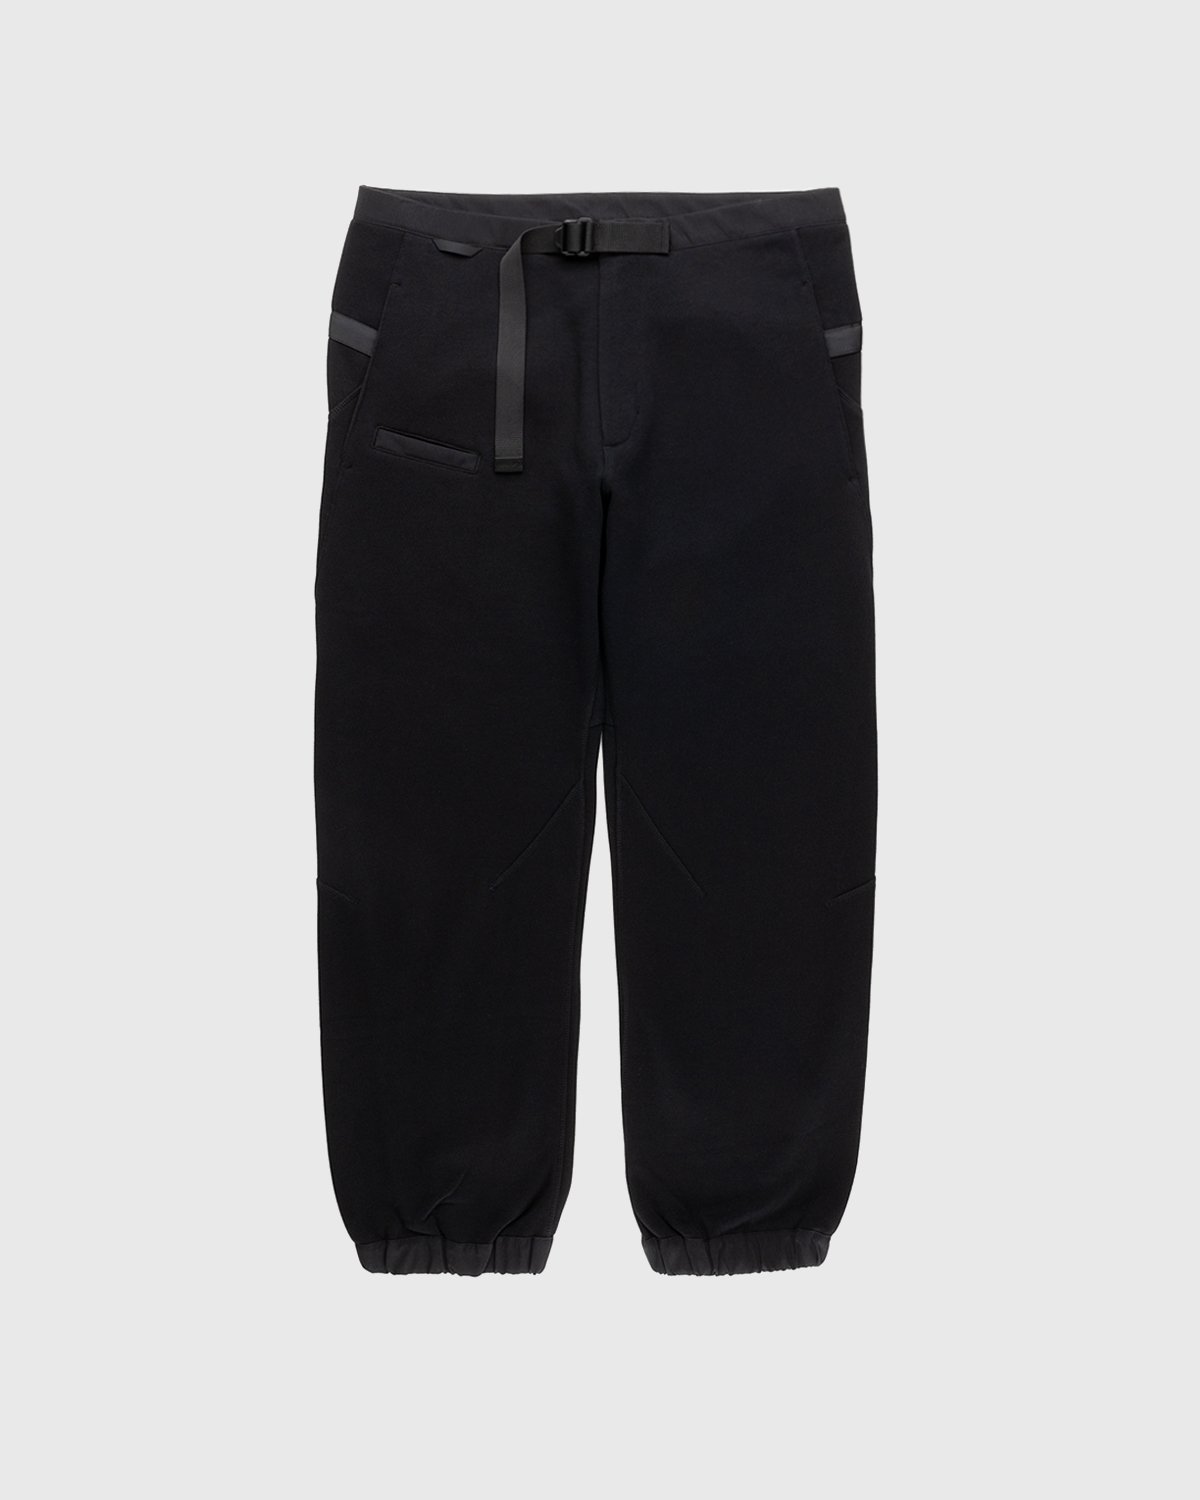 ACRONYM - P39-PR Pants Black - Clothing - Black - Image 1